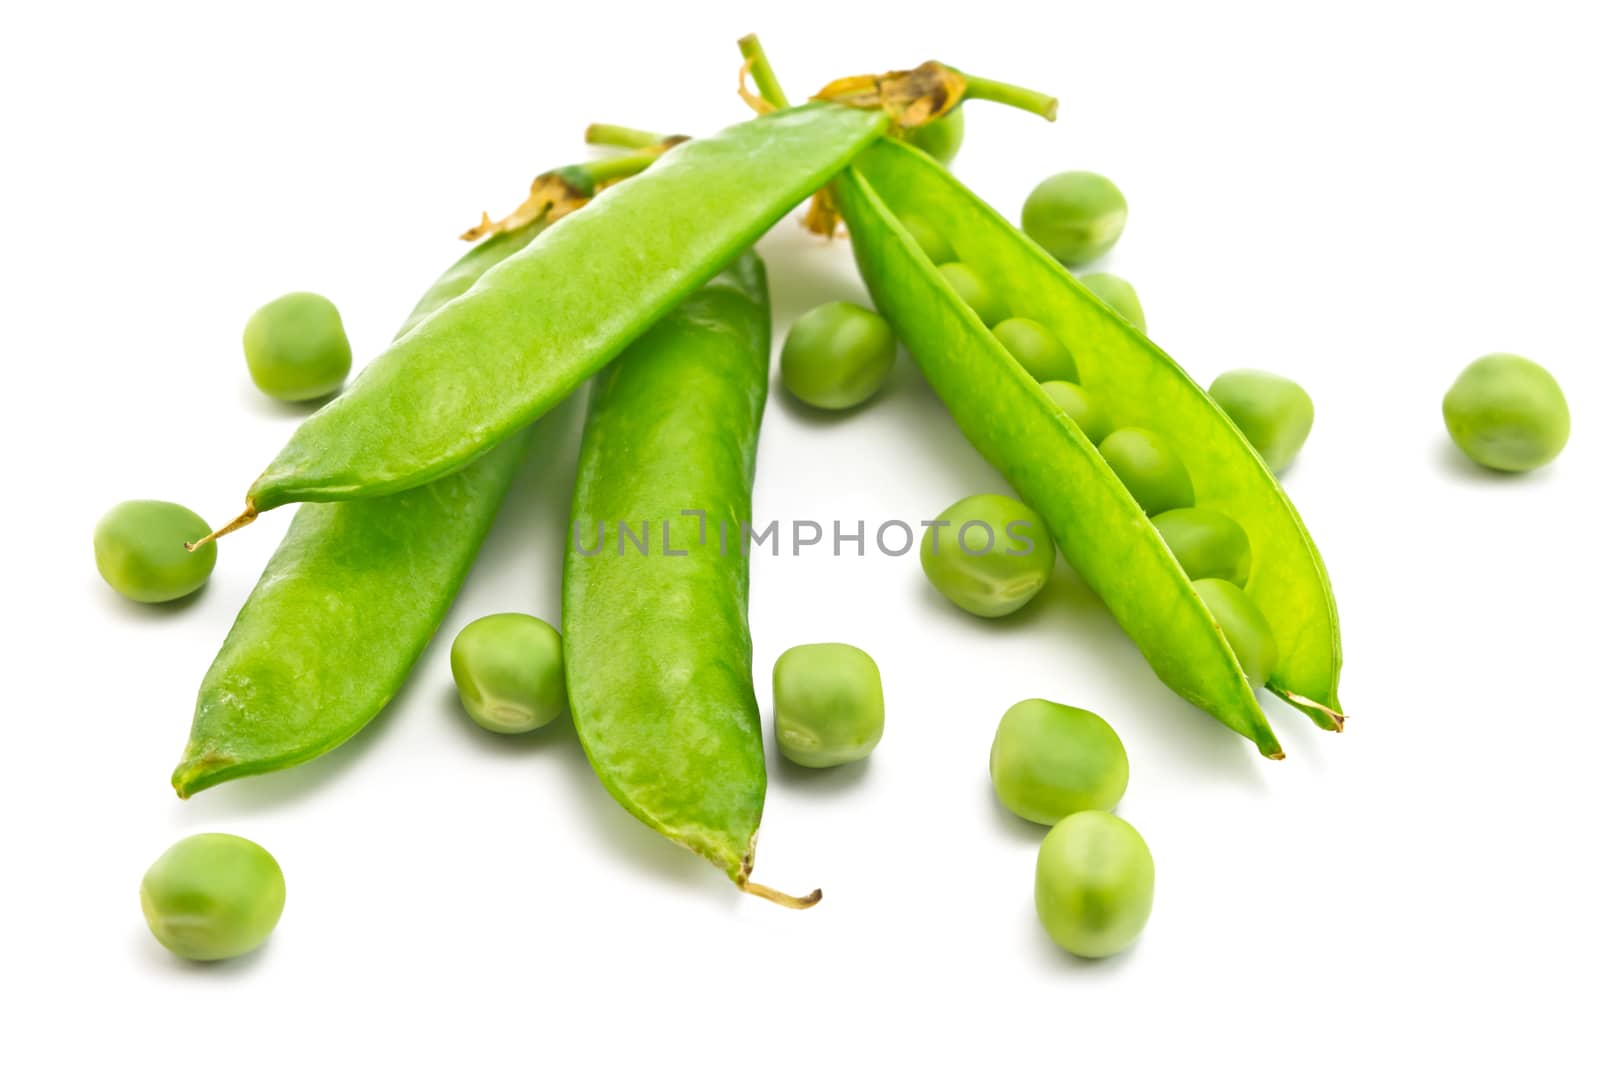 green peas by pilotL39